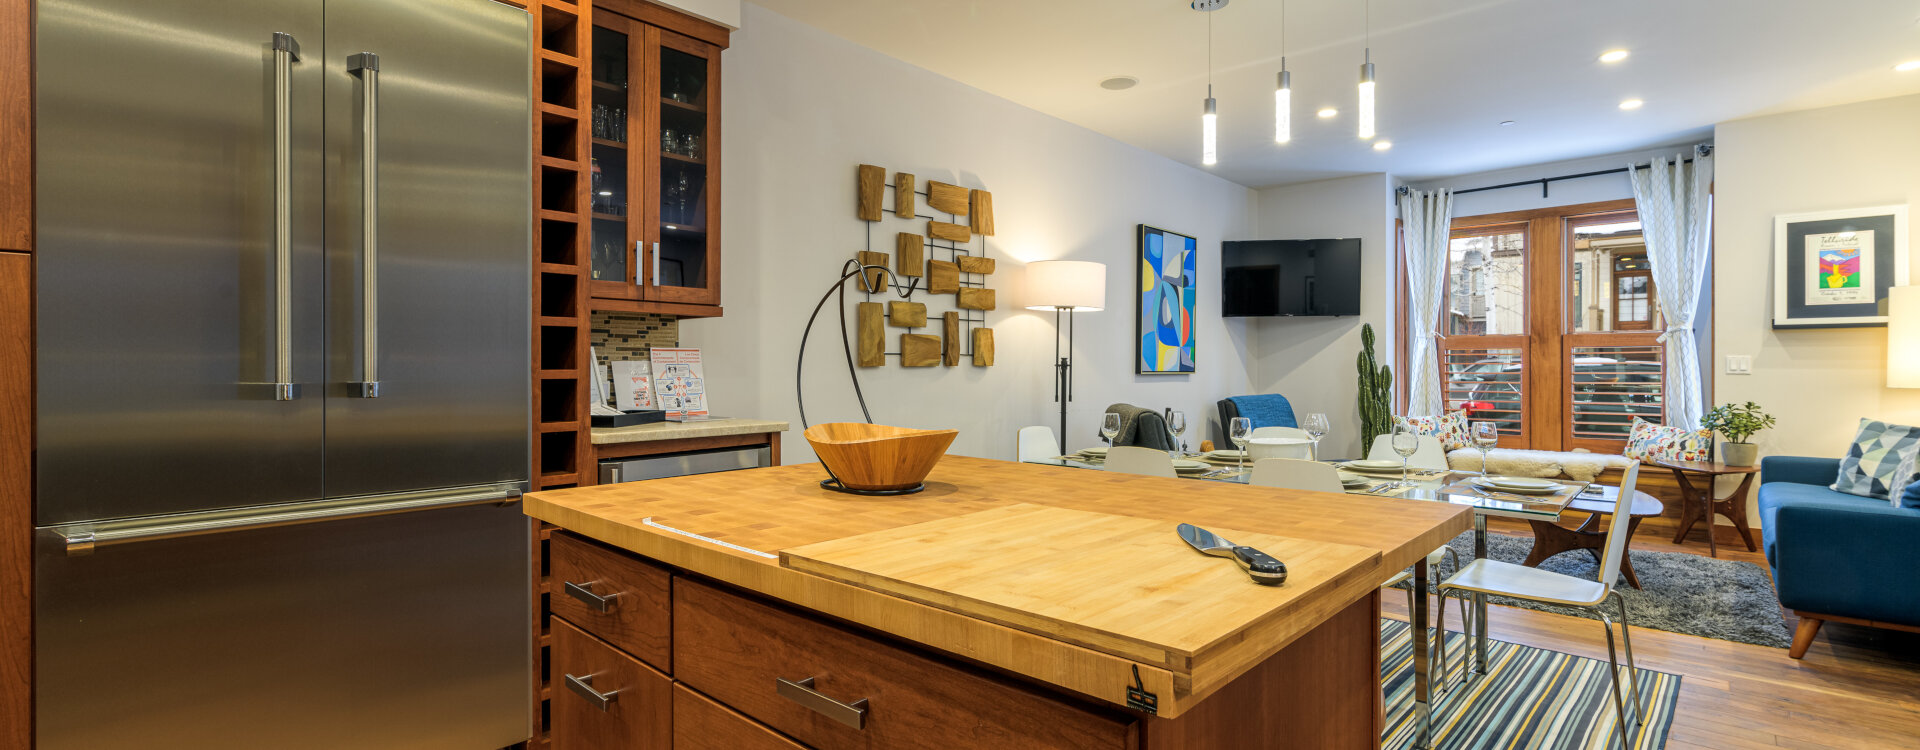 2.09-telluride-local-luxury-kitchen-living-room-rev